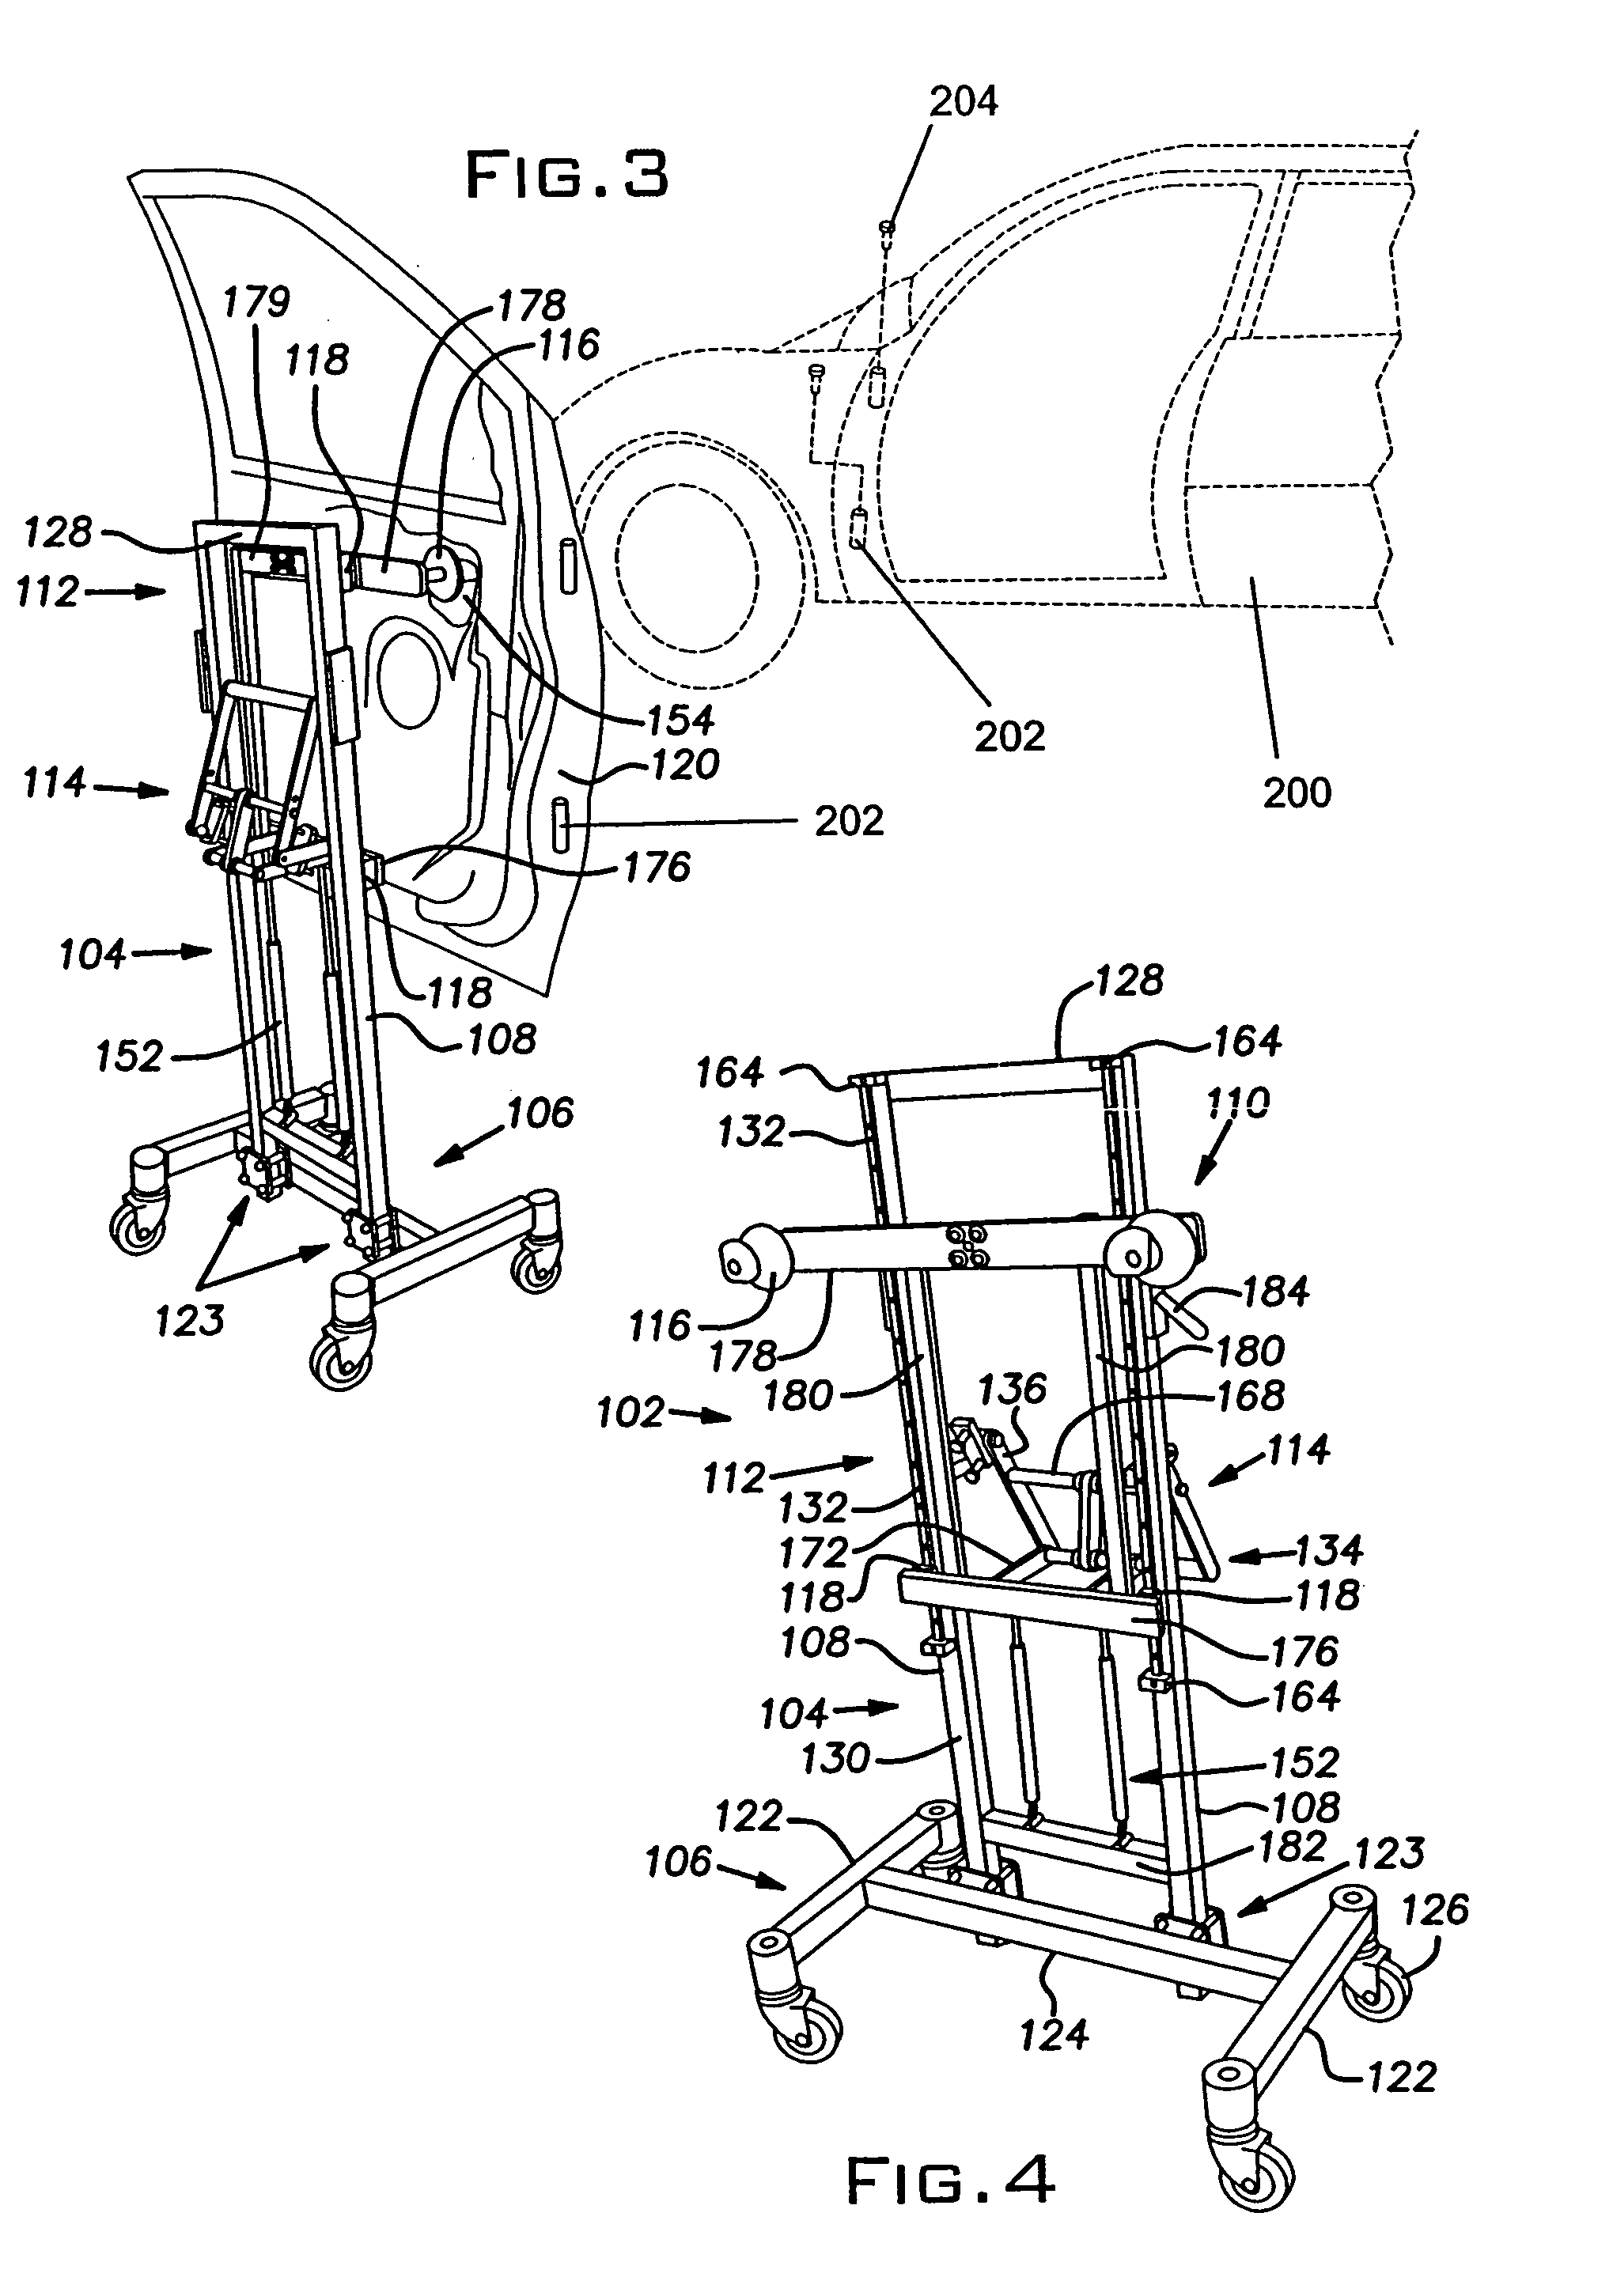 Door lifting apparatus and method